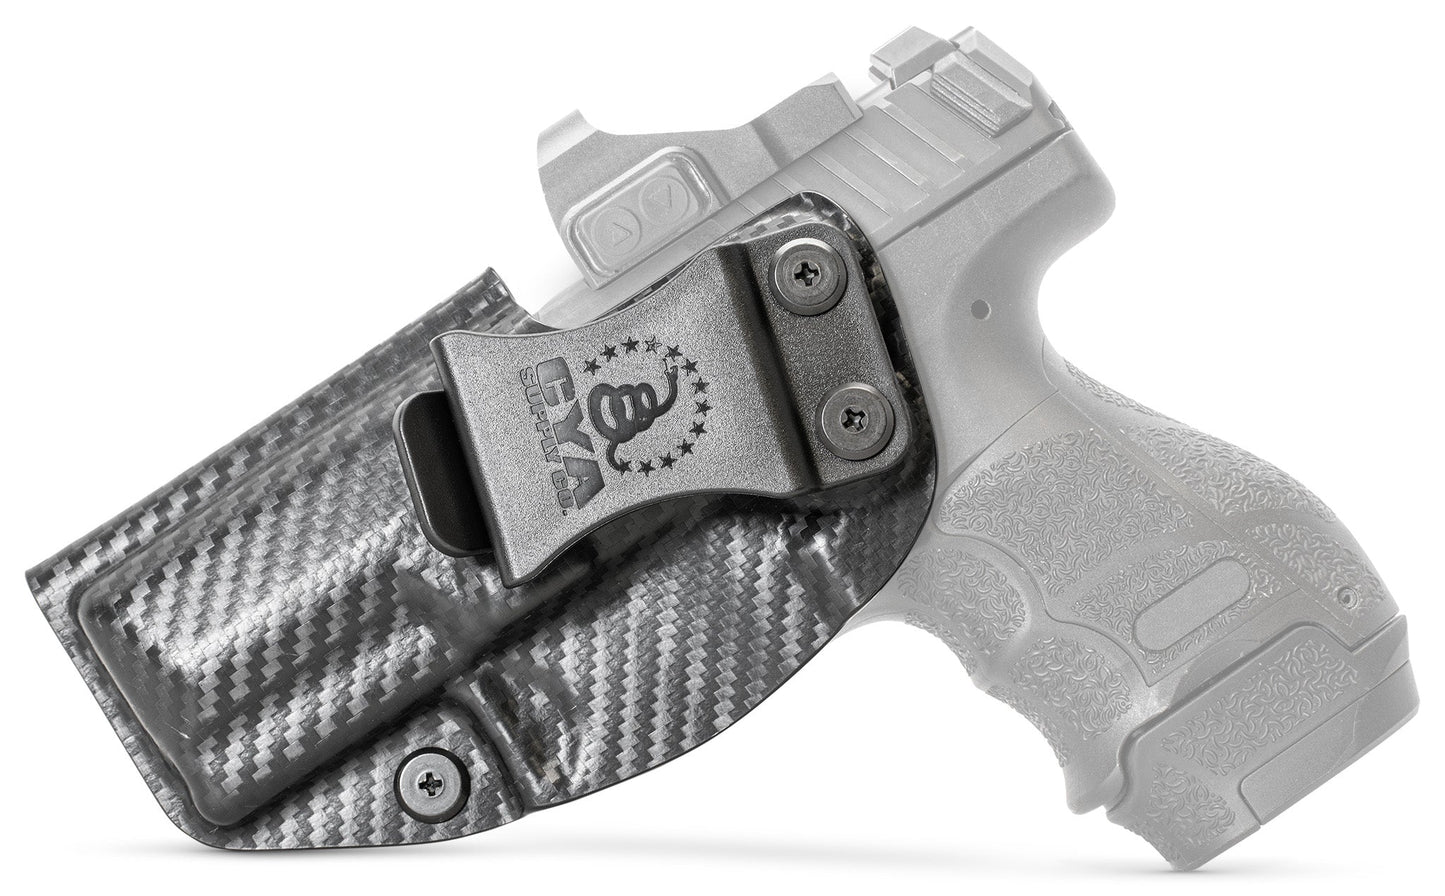 CYA carbon steel Base IWB holster with a black clip on a black hk vp9sk handgun